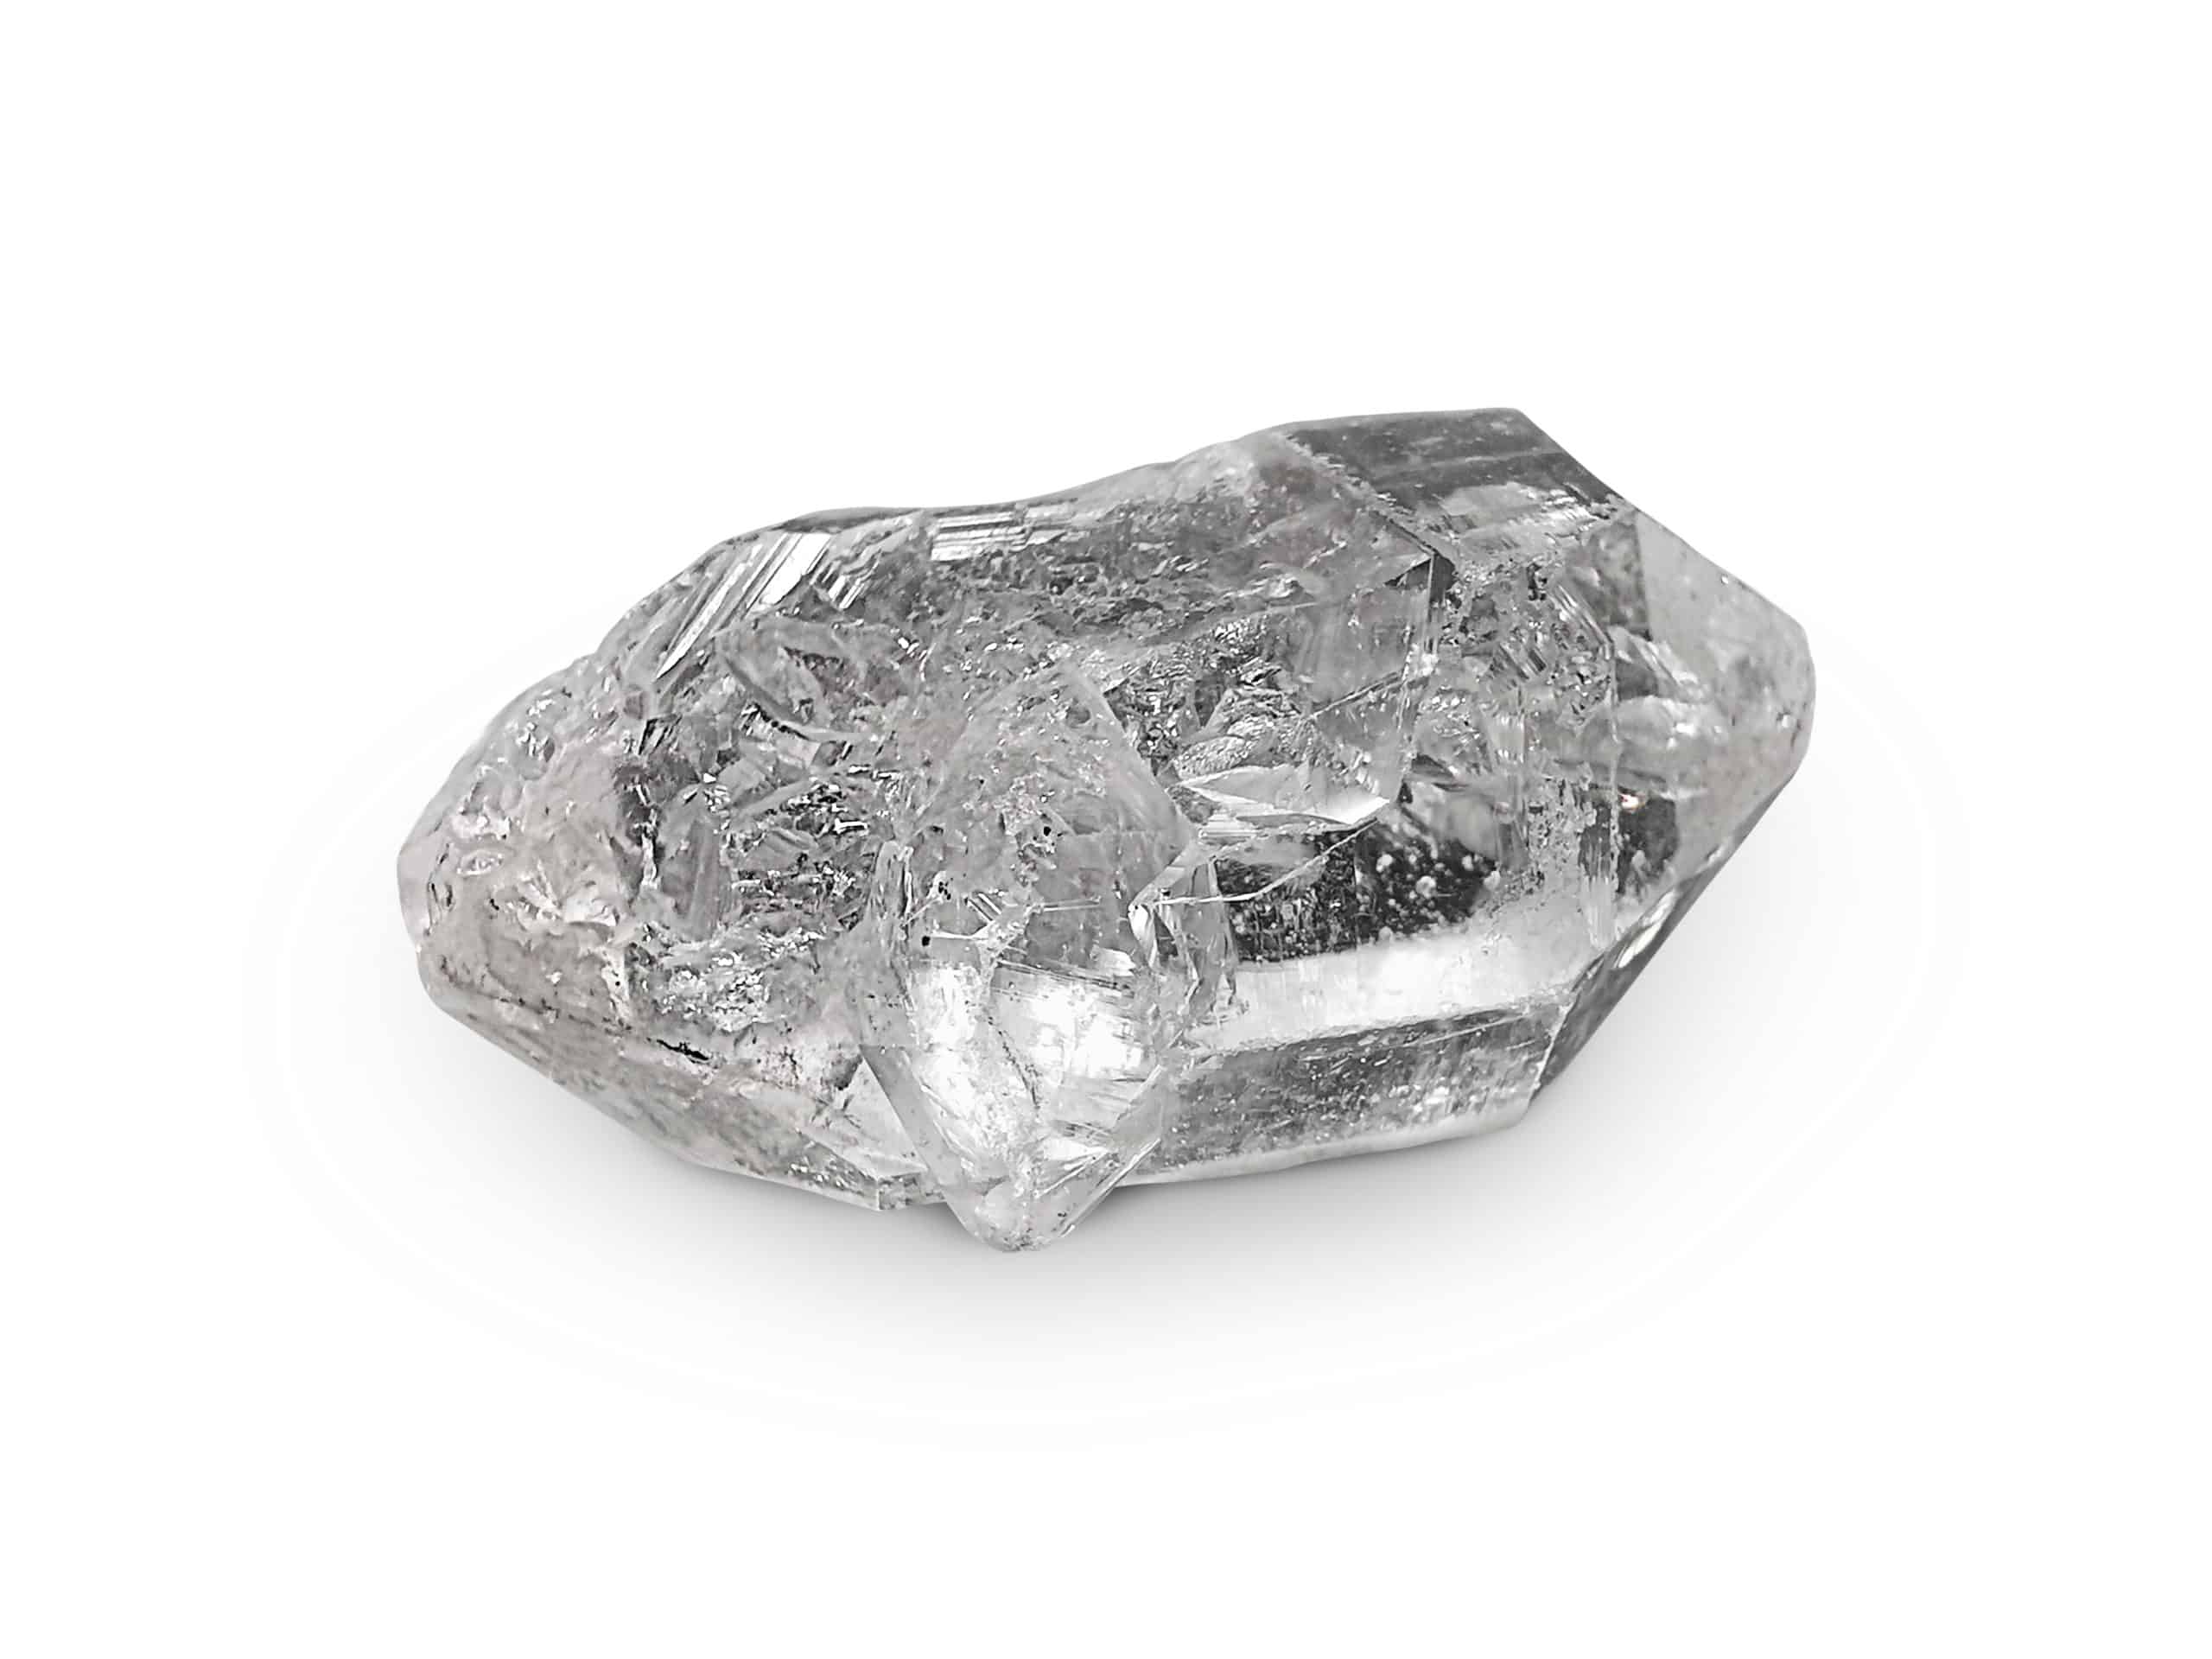 Natural Diamond